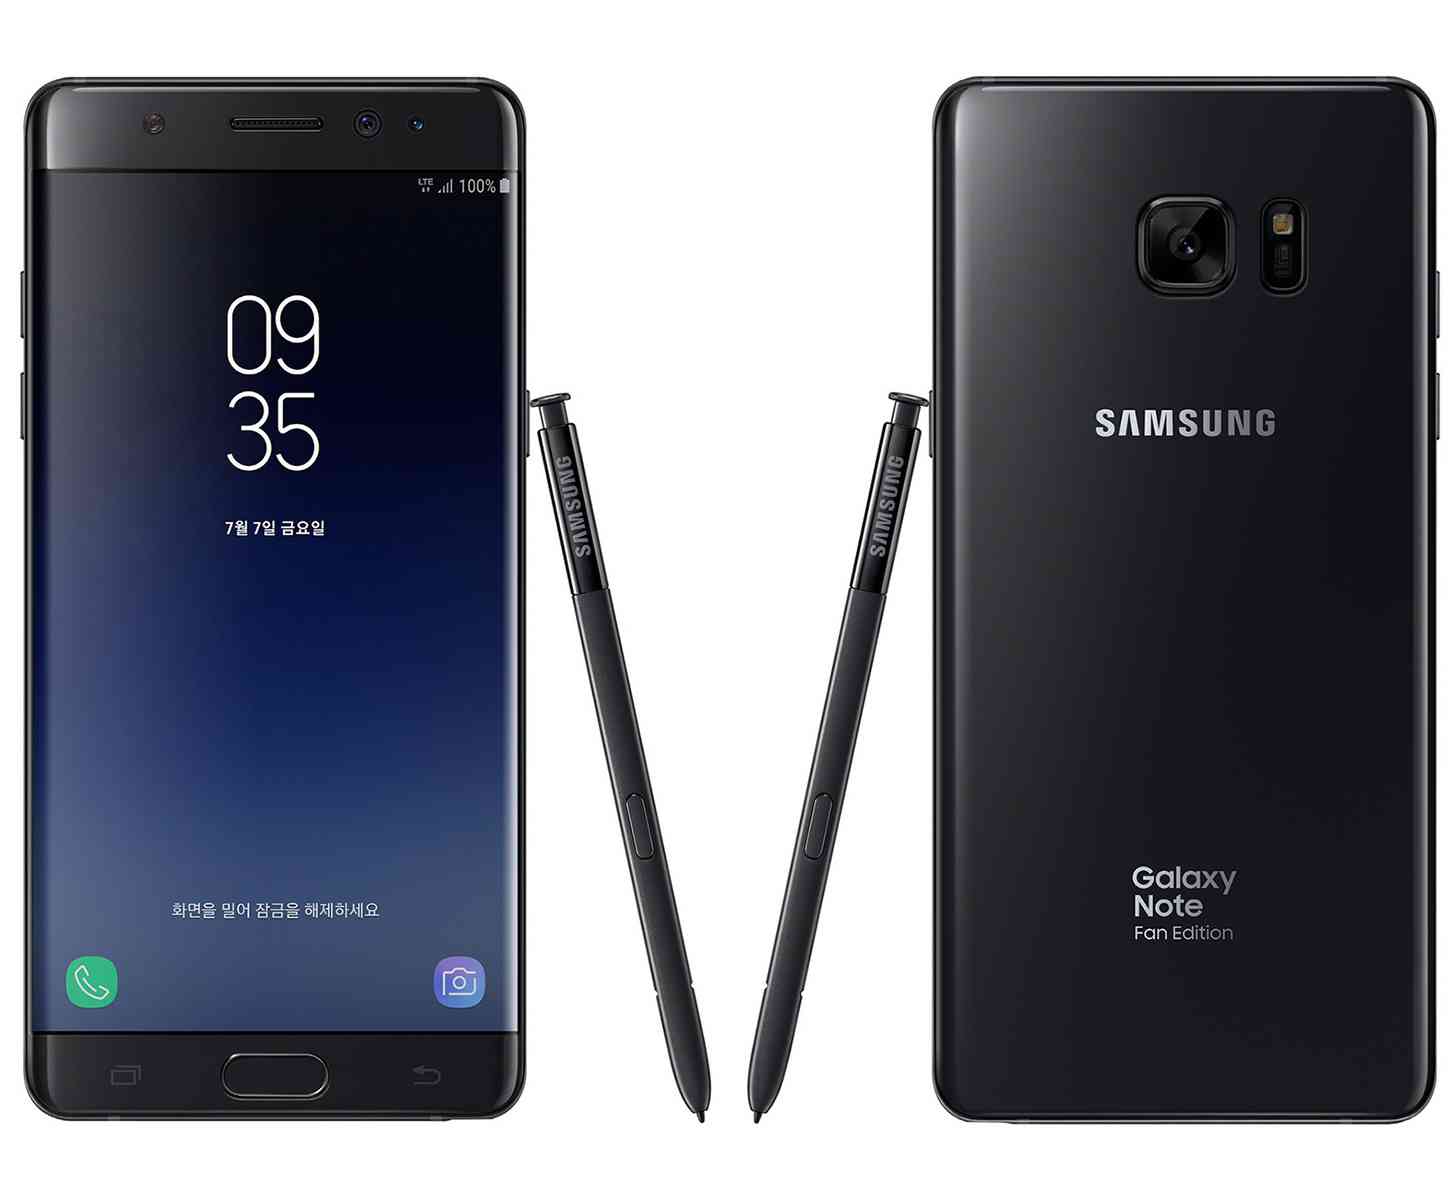 Samsung Galaxy Note Fan Edition official black